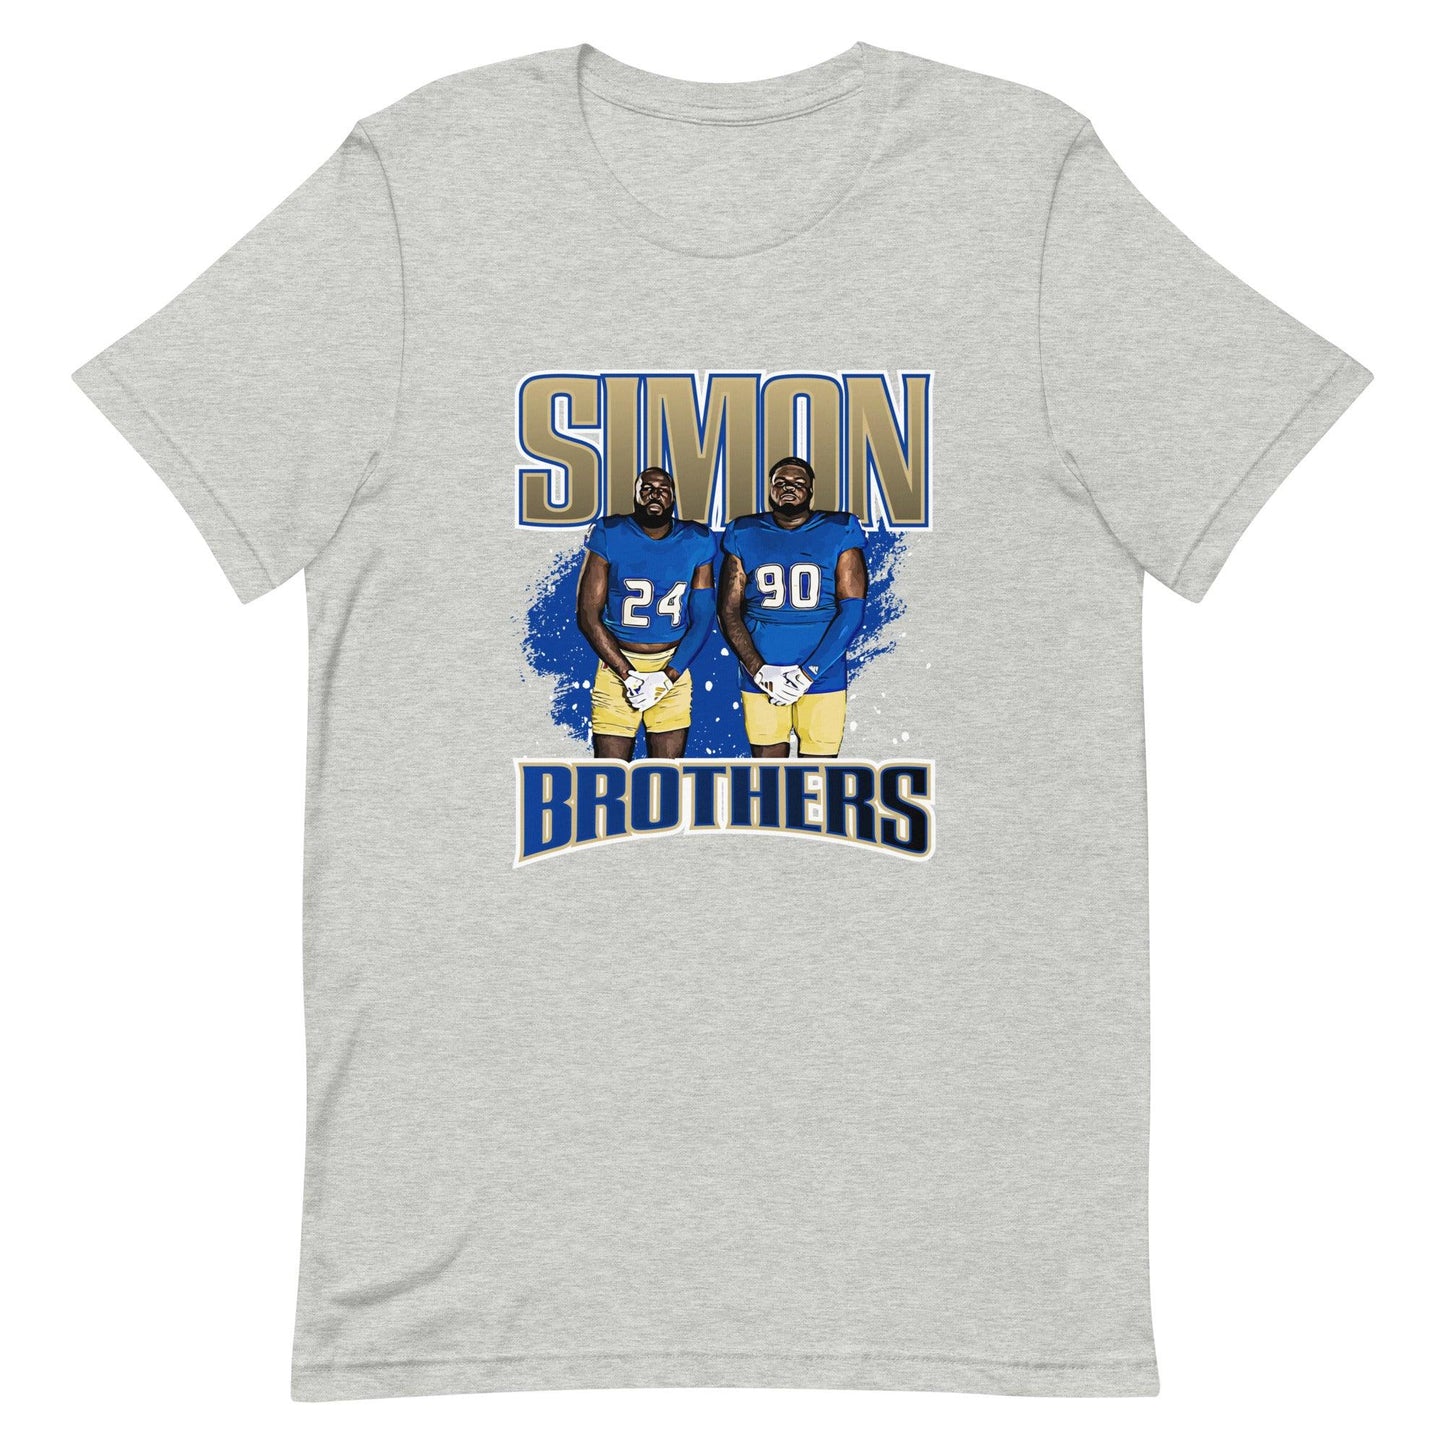 Julien Simon "Simon Brothers" t-shirt - Fan Arch